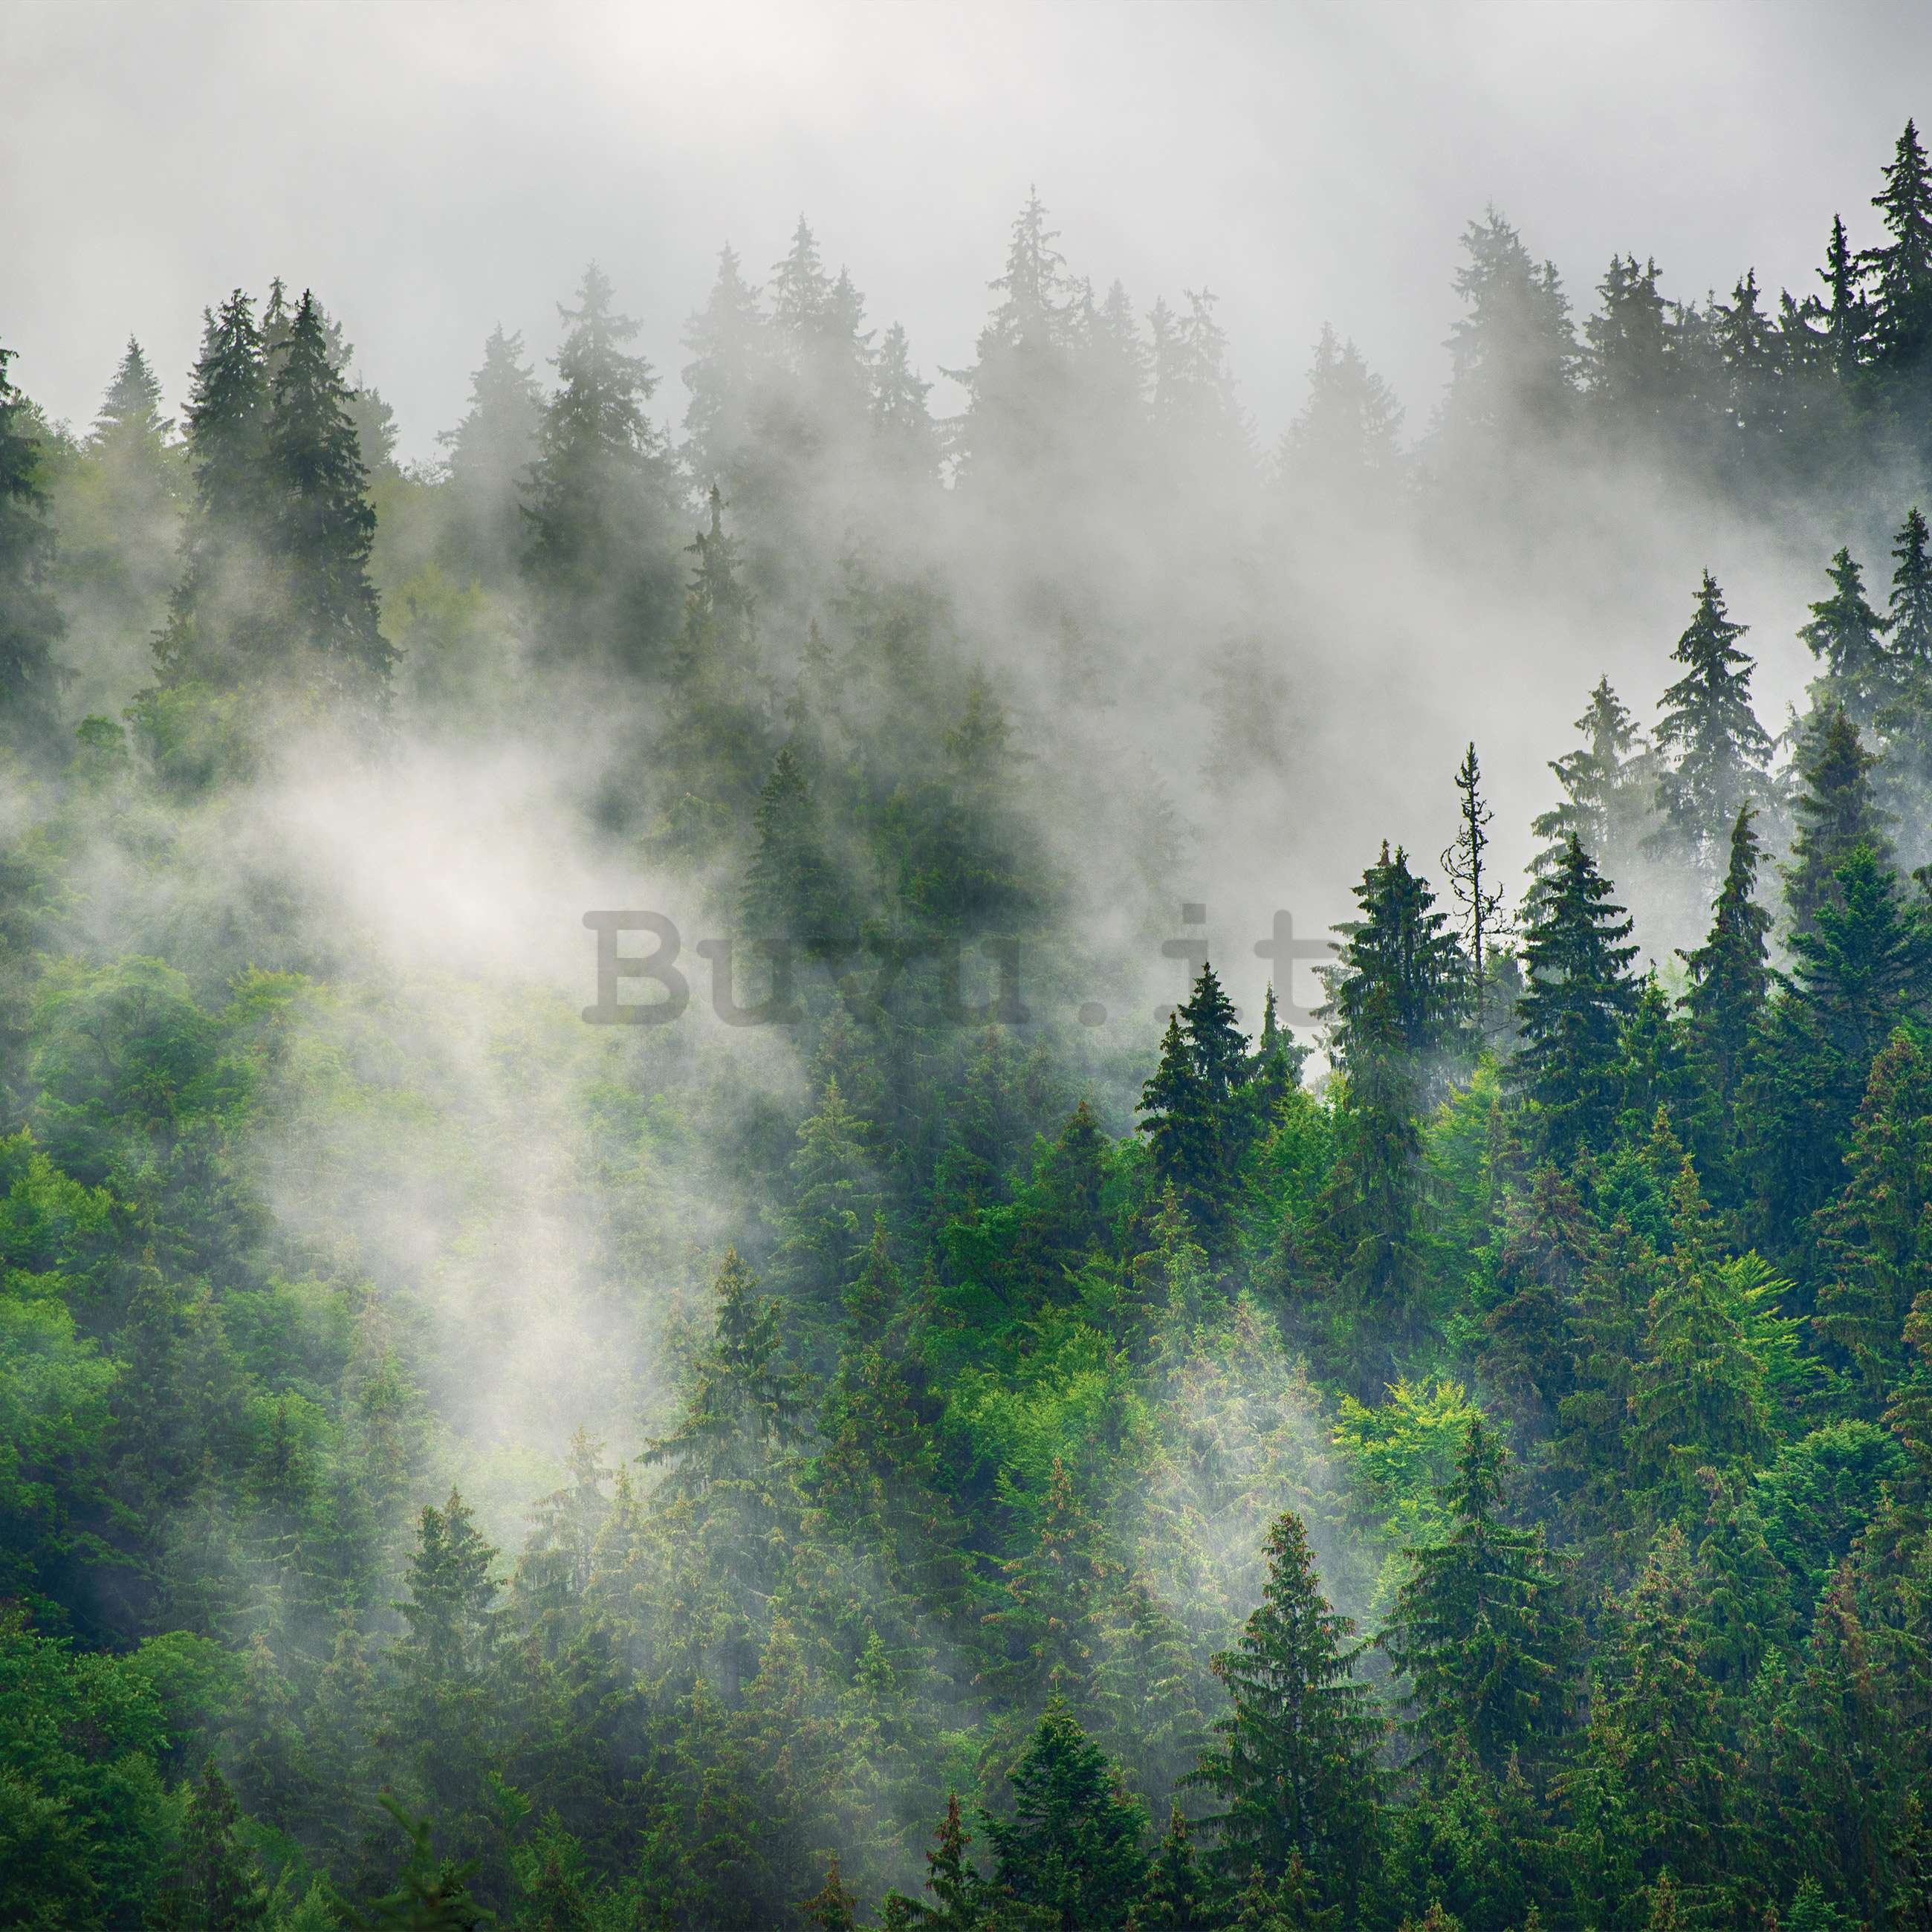 Fotomurale in TNT: Nebbia sulla foresta (5) - 152,5x104 cm